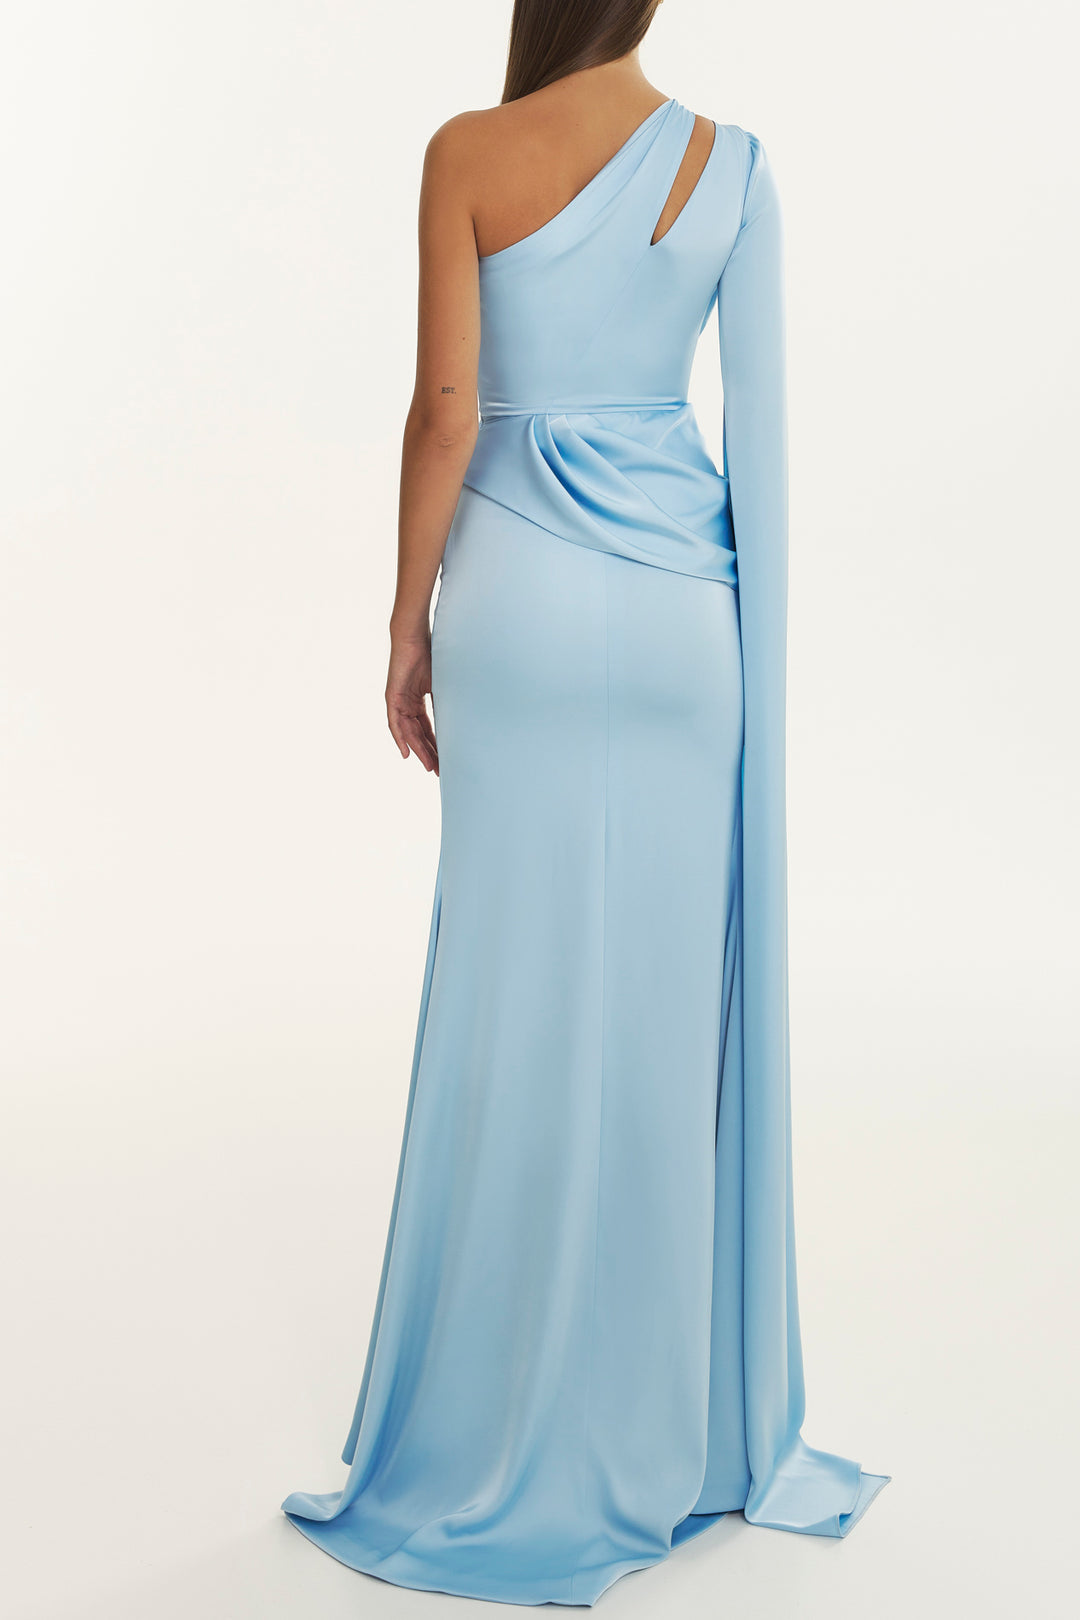 Hera Frost Blue Crepe Long Dress